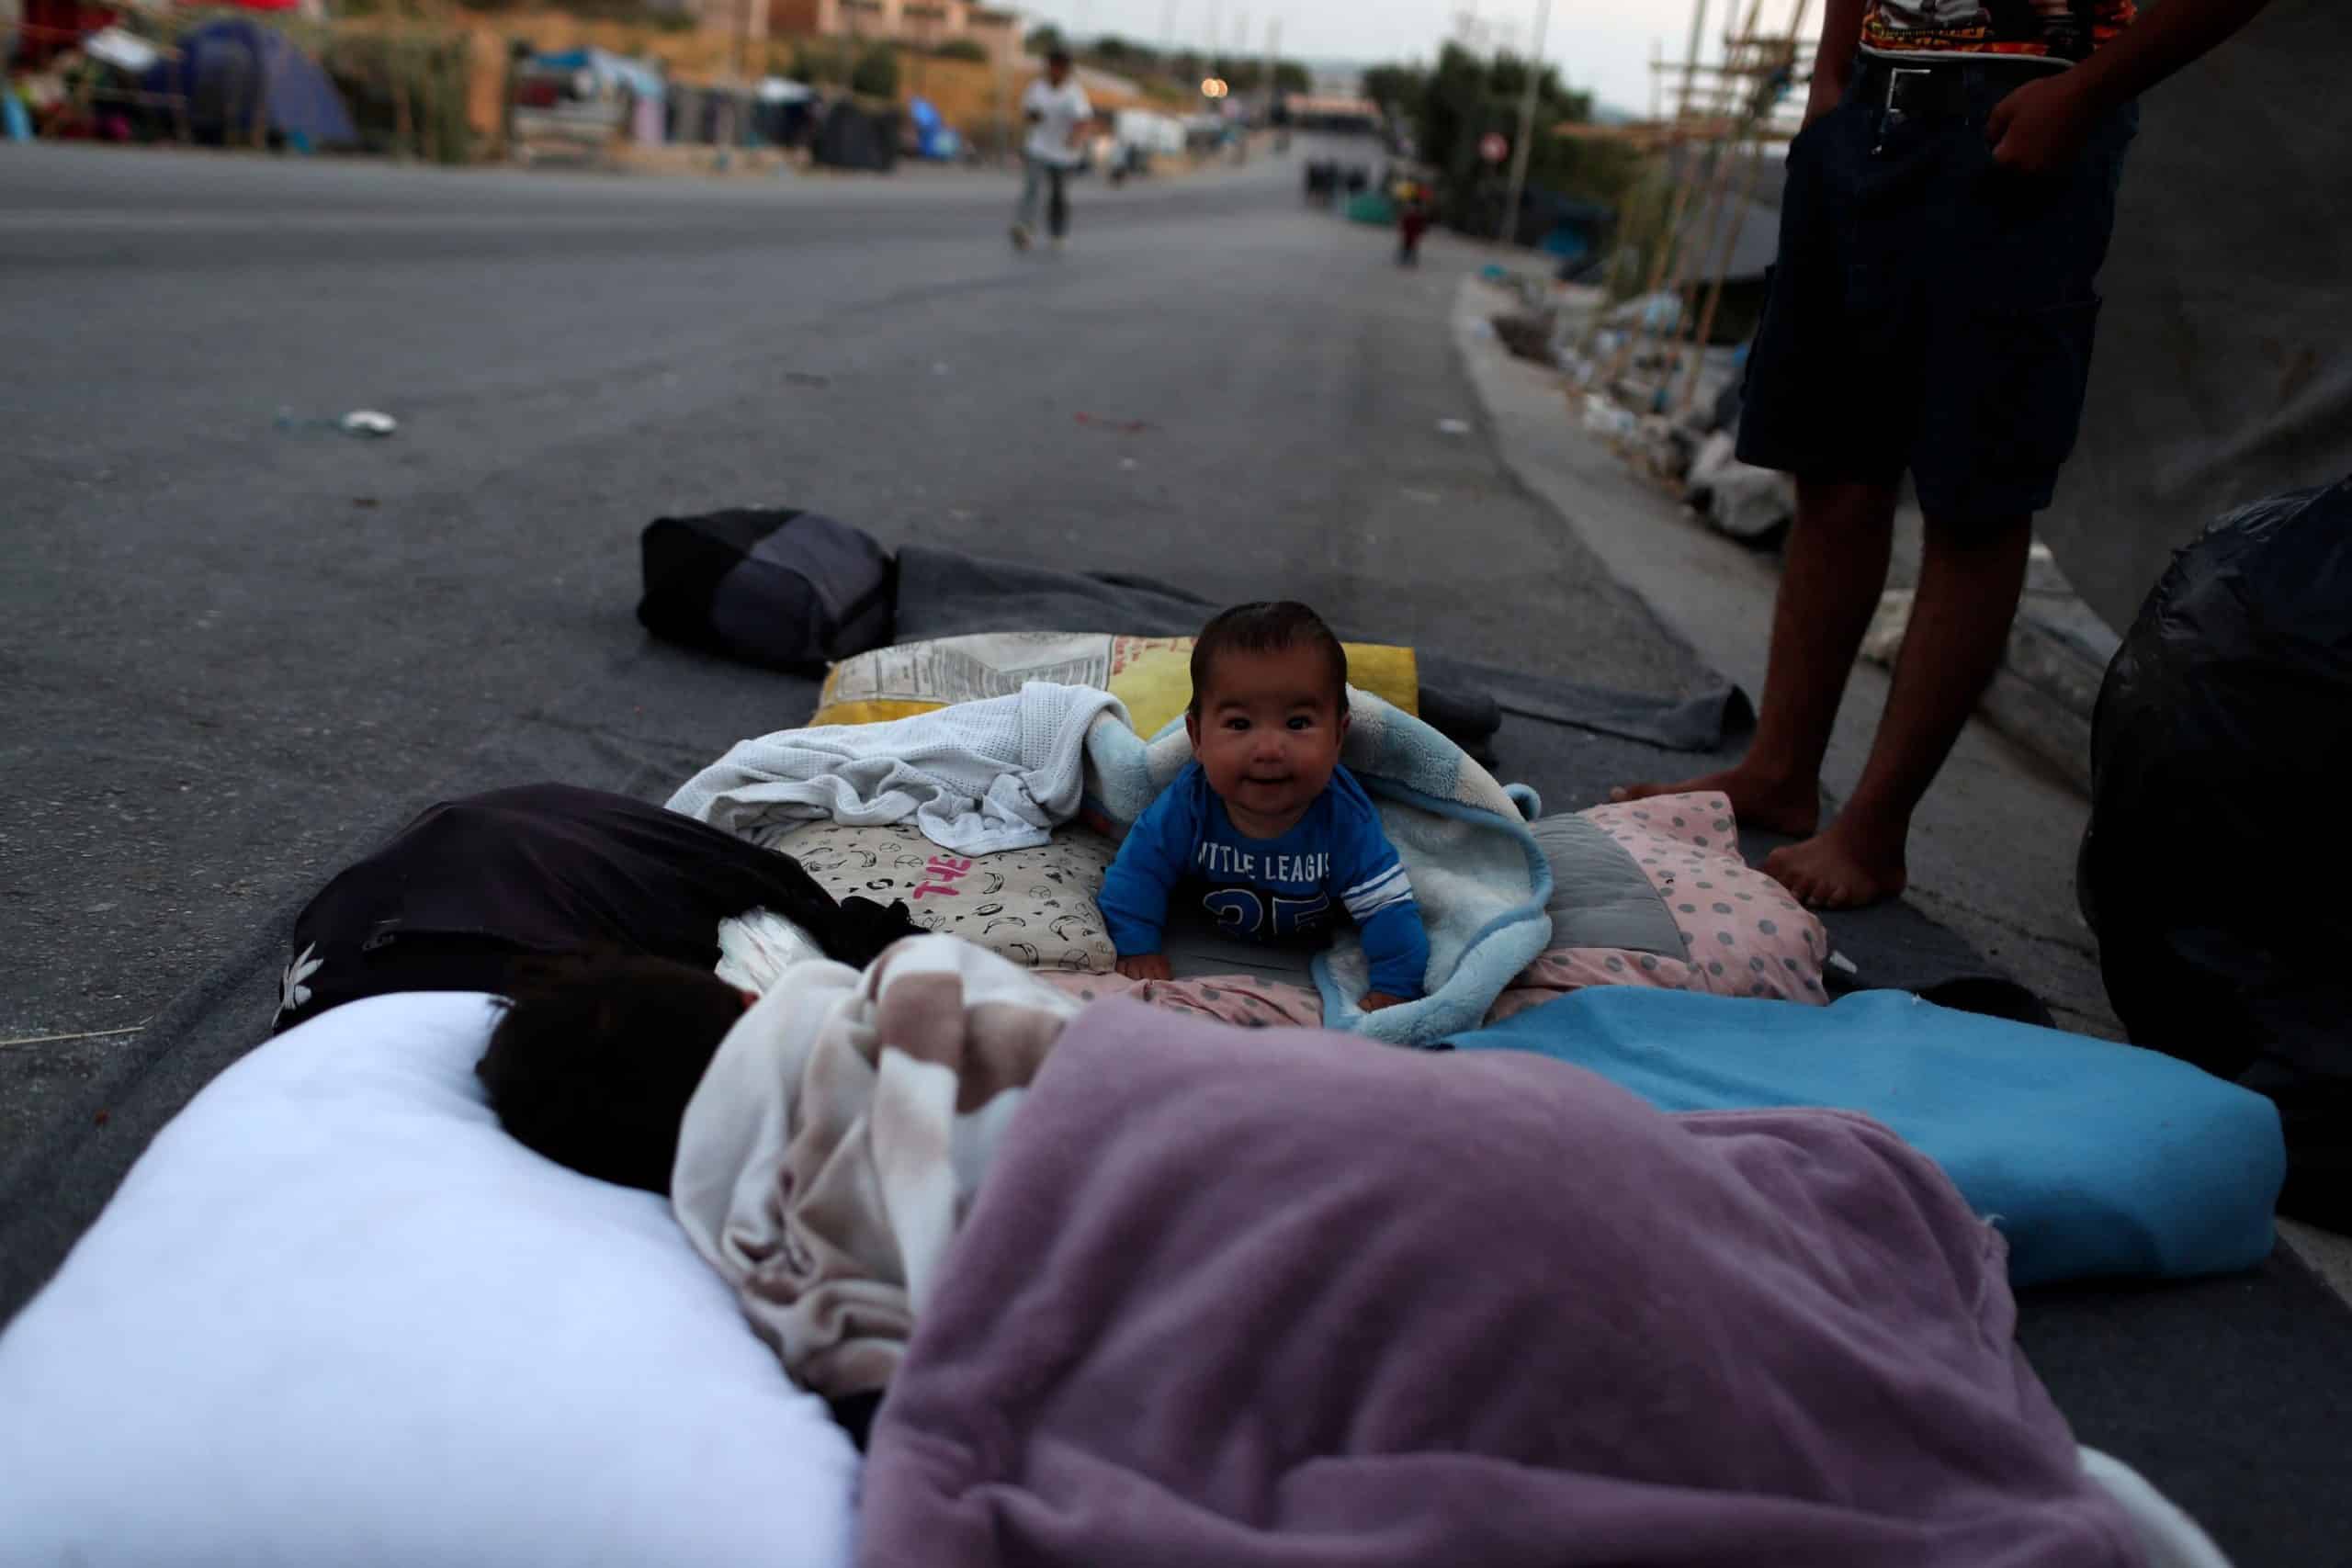 Britain to ‘turn its back’ on unaccompanied child refugees